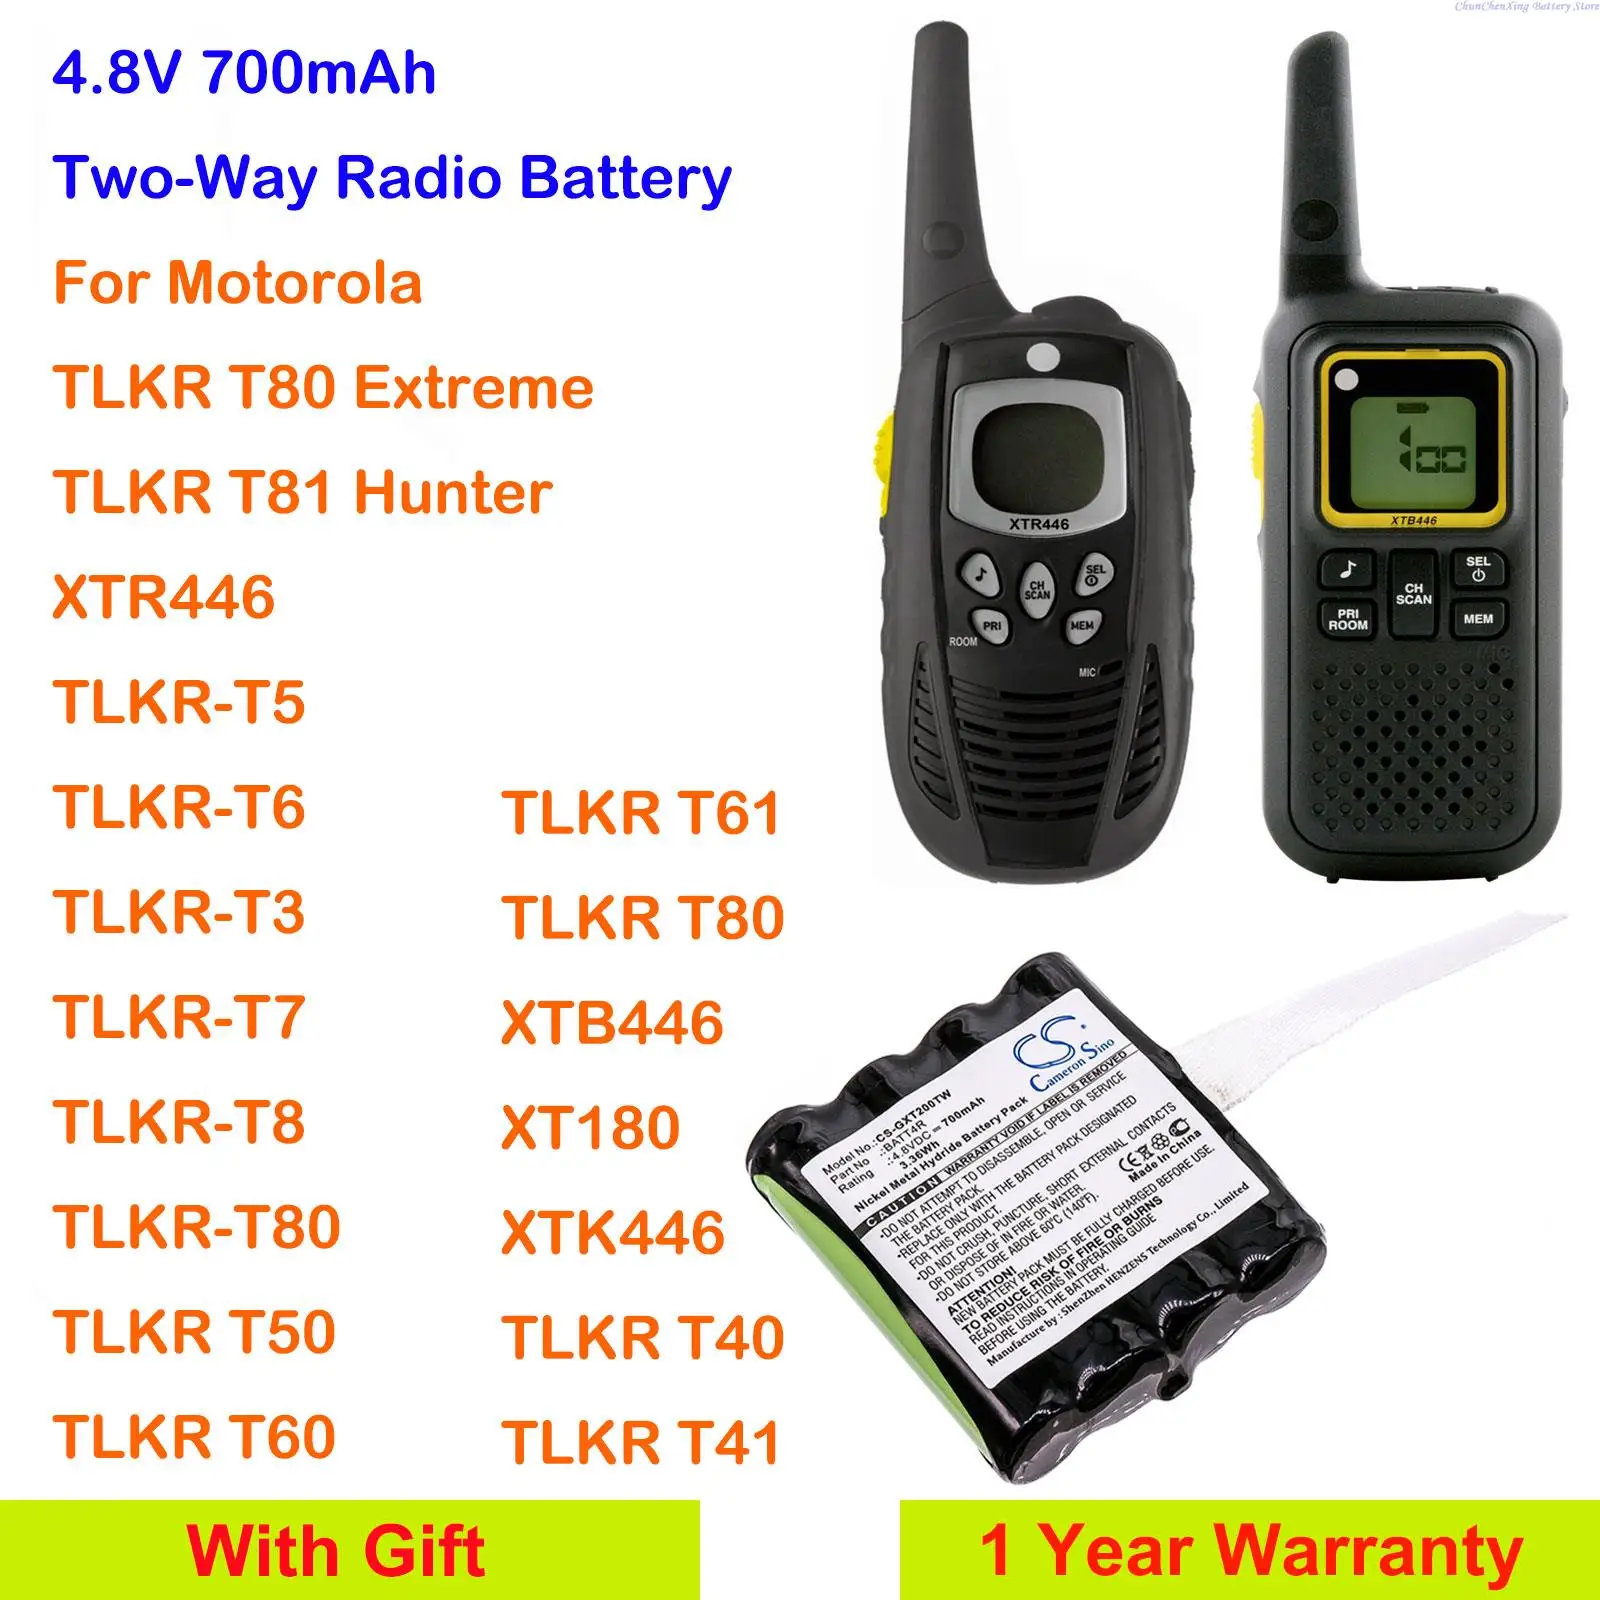 

CS 700mAh Battery for Motorola TLKR-T3,TLKR-T5,TLKR-T6,T7,T8,T80,XTR446, T40,T41,T50,T60,T61,T81,XT180,XTB446,XTK446